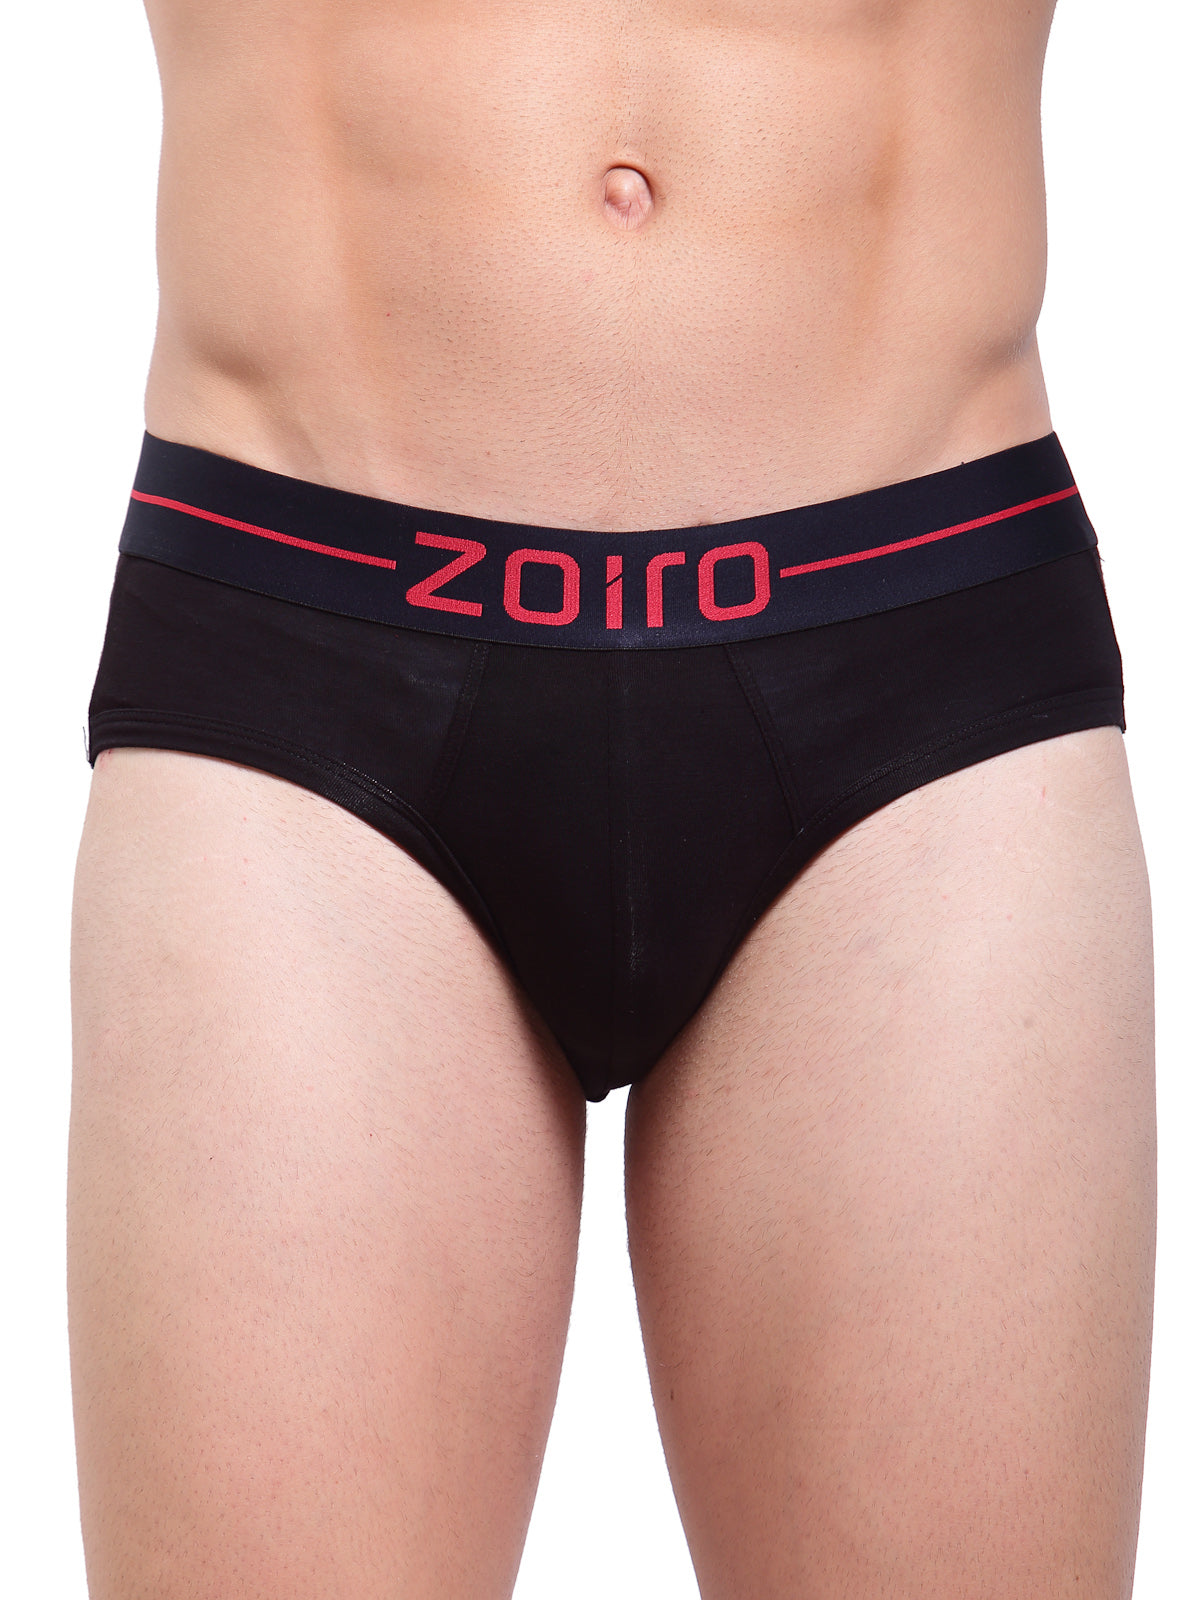 Zoiro Men&#39;s Cotton, Modal, Spandex Softs Brief Black (Red Elastic Branding)